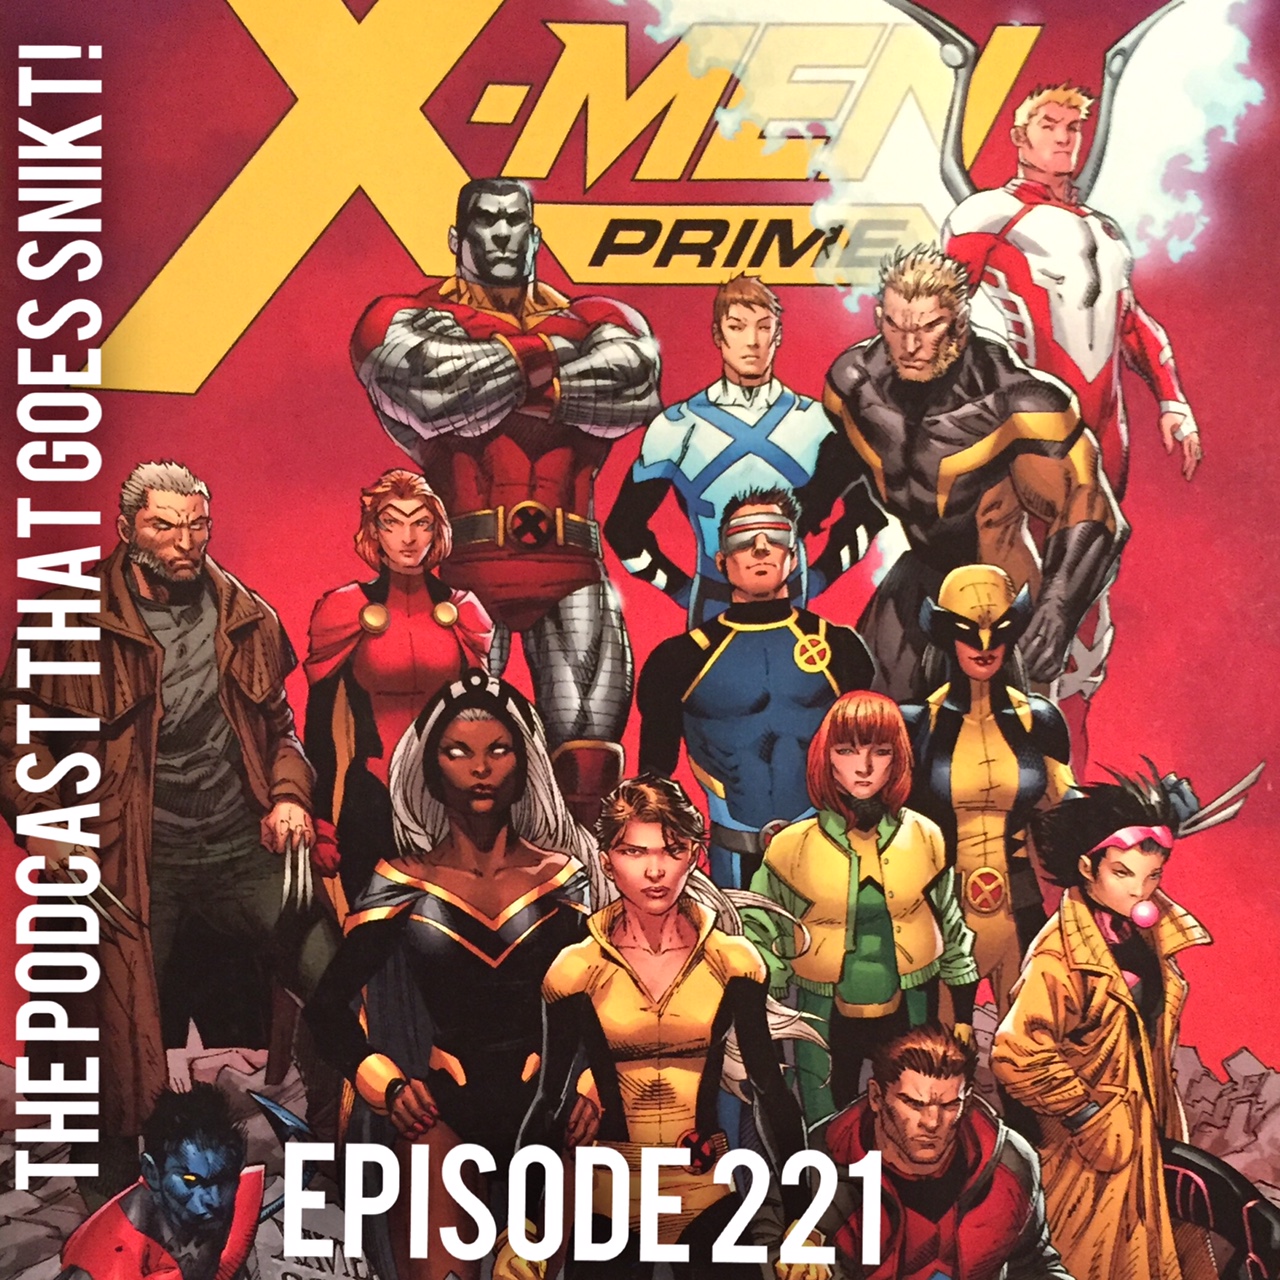 Episode 221-X-Men Prime!